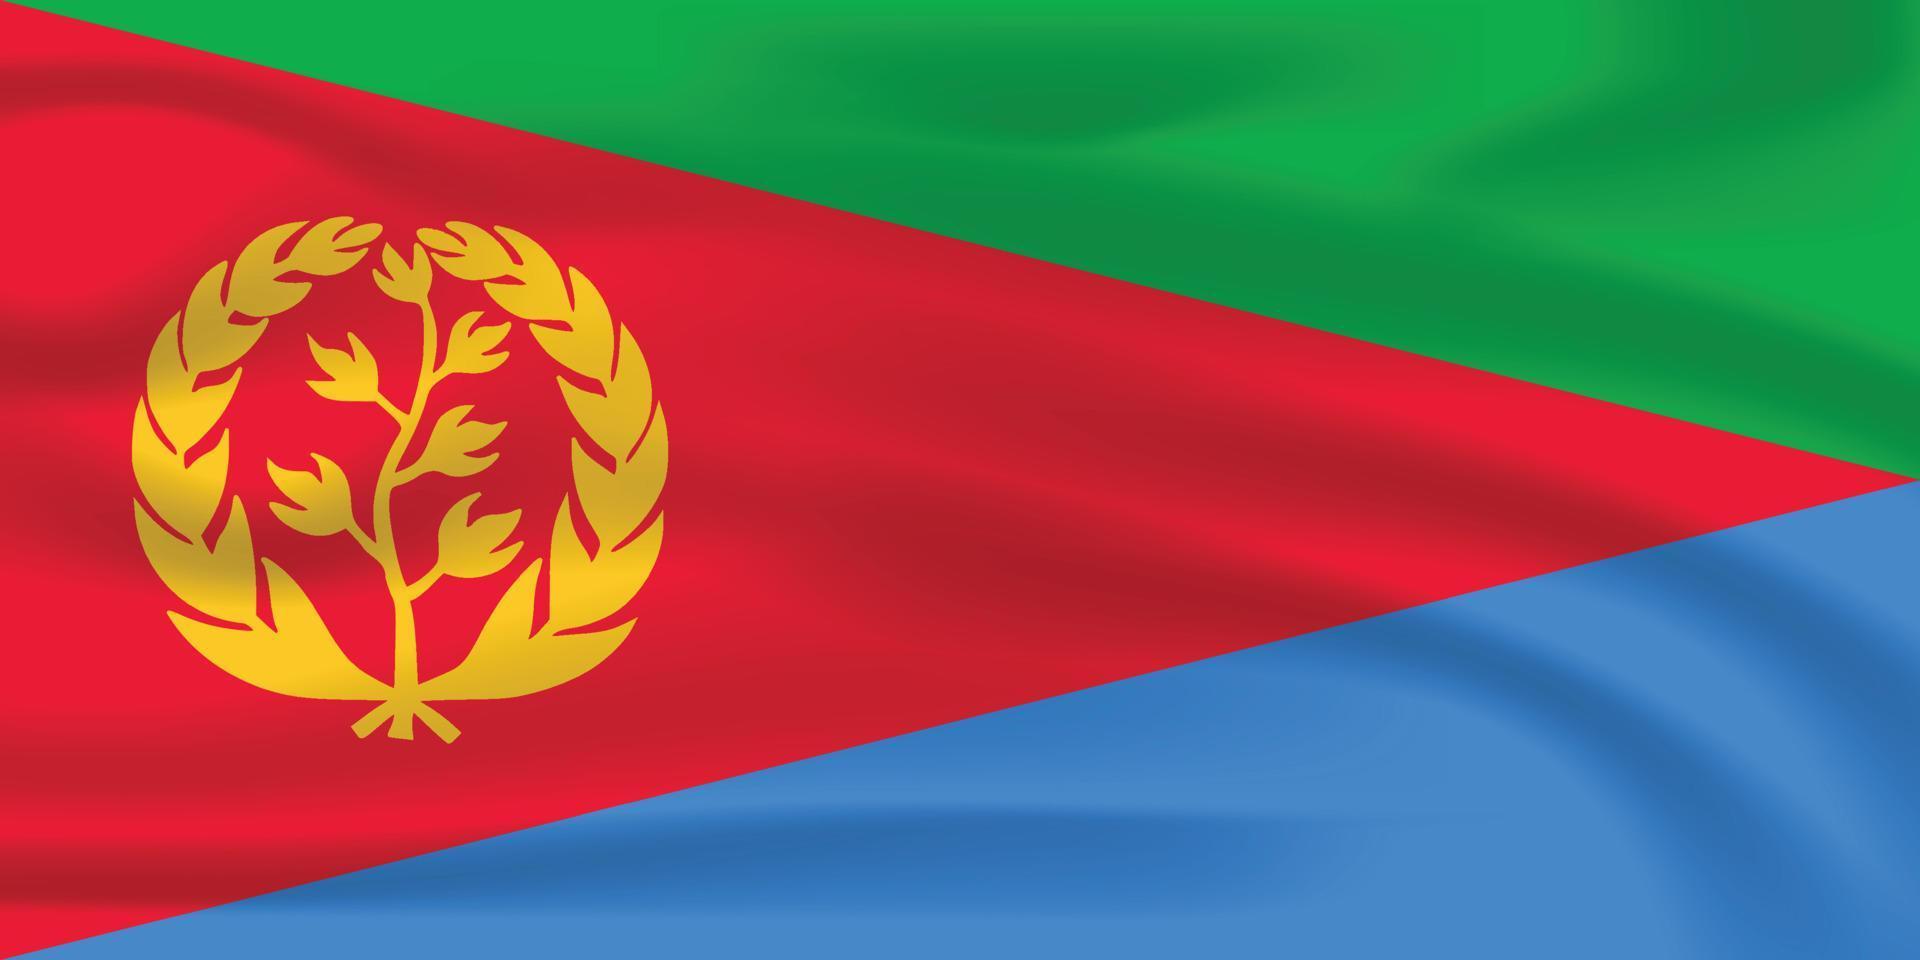 bandeira da eritreia. bandeira de ondulação realista do estado da eritreia. tecido texturizado bandeira fluida da eritreia. vetor